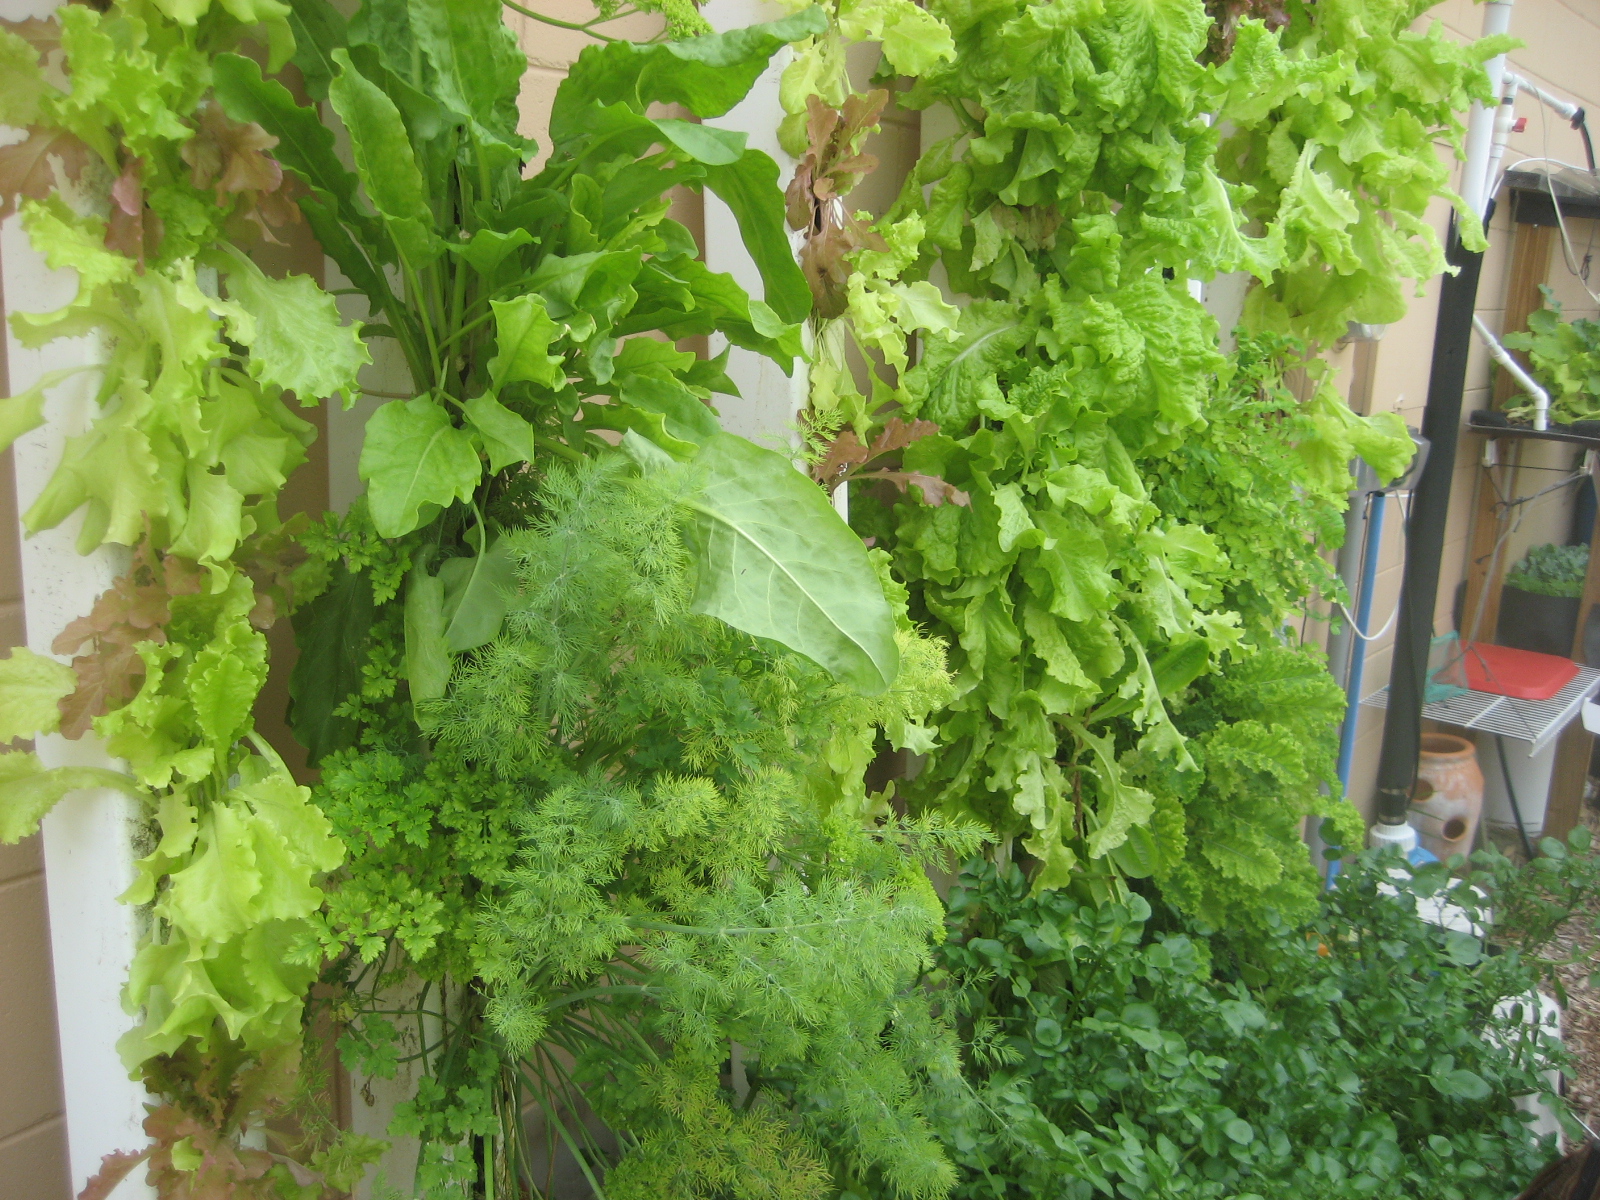 Aquaponic Gardening .... consider becoming an Urban Farmer!